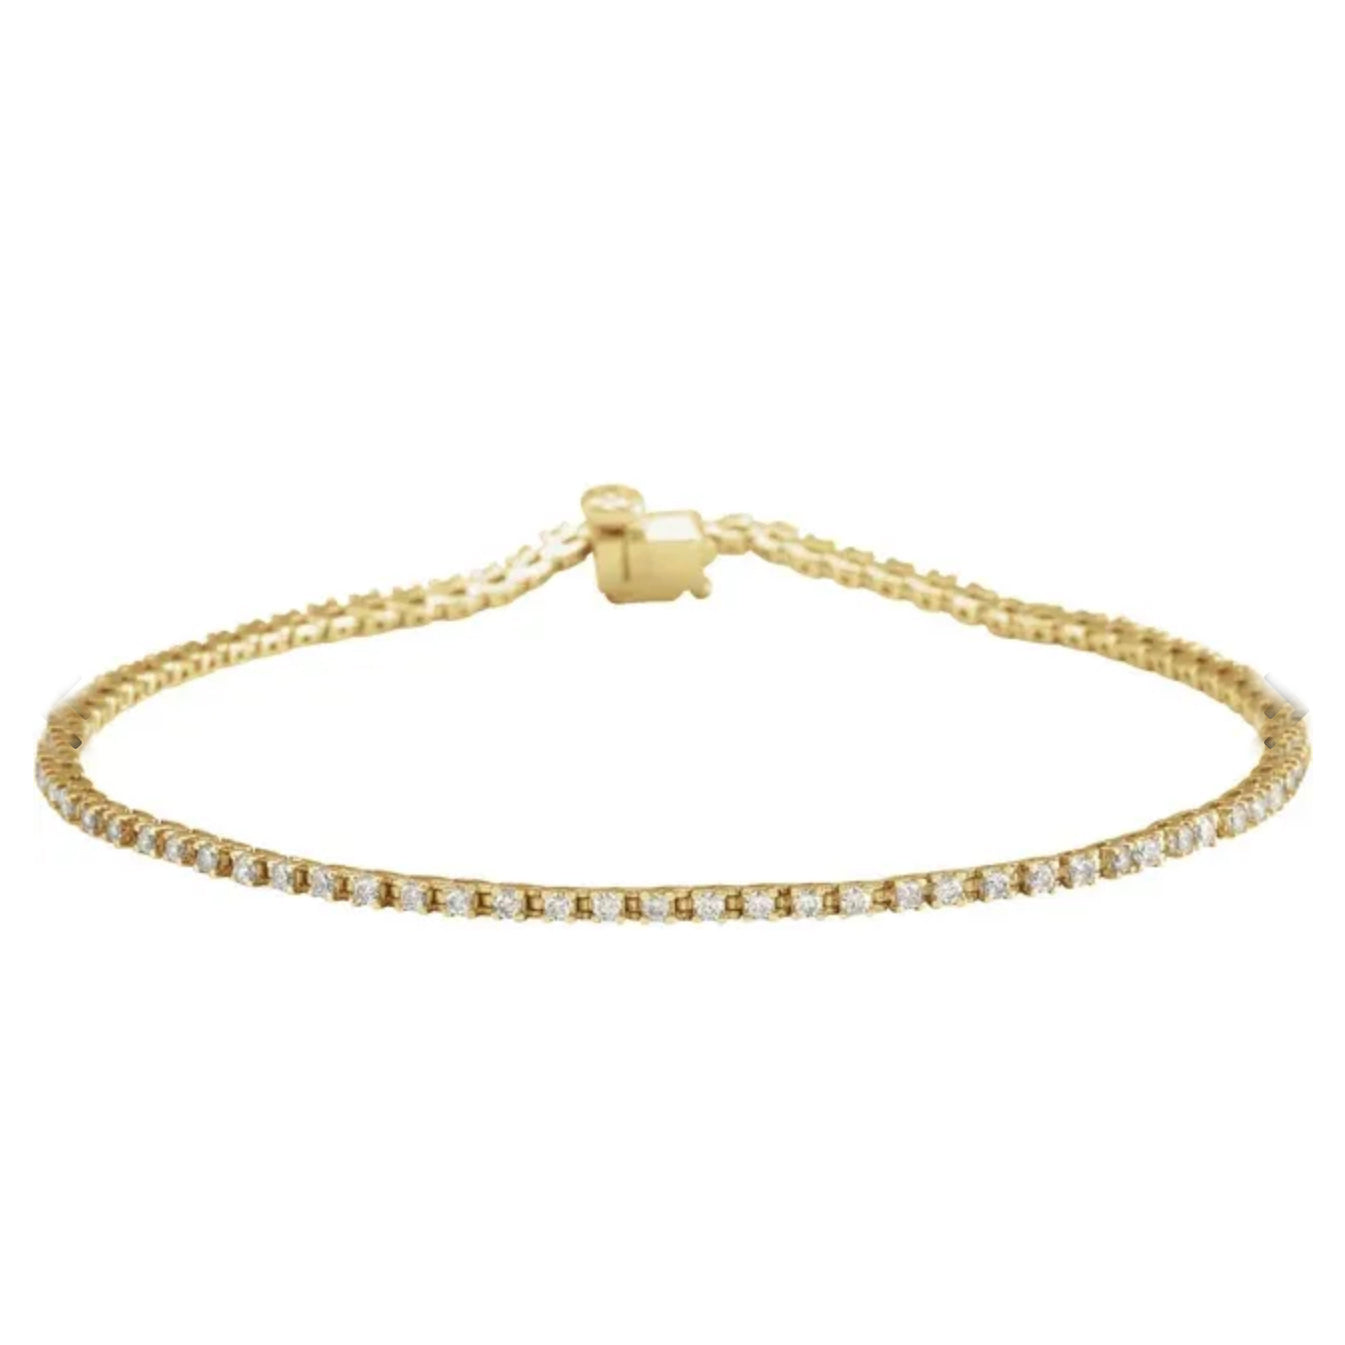 1 carat tennis bracelet yellow gold